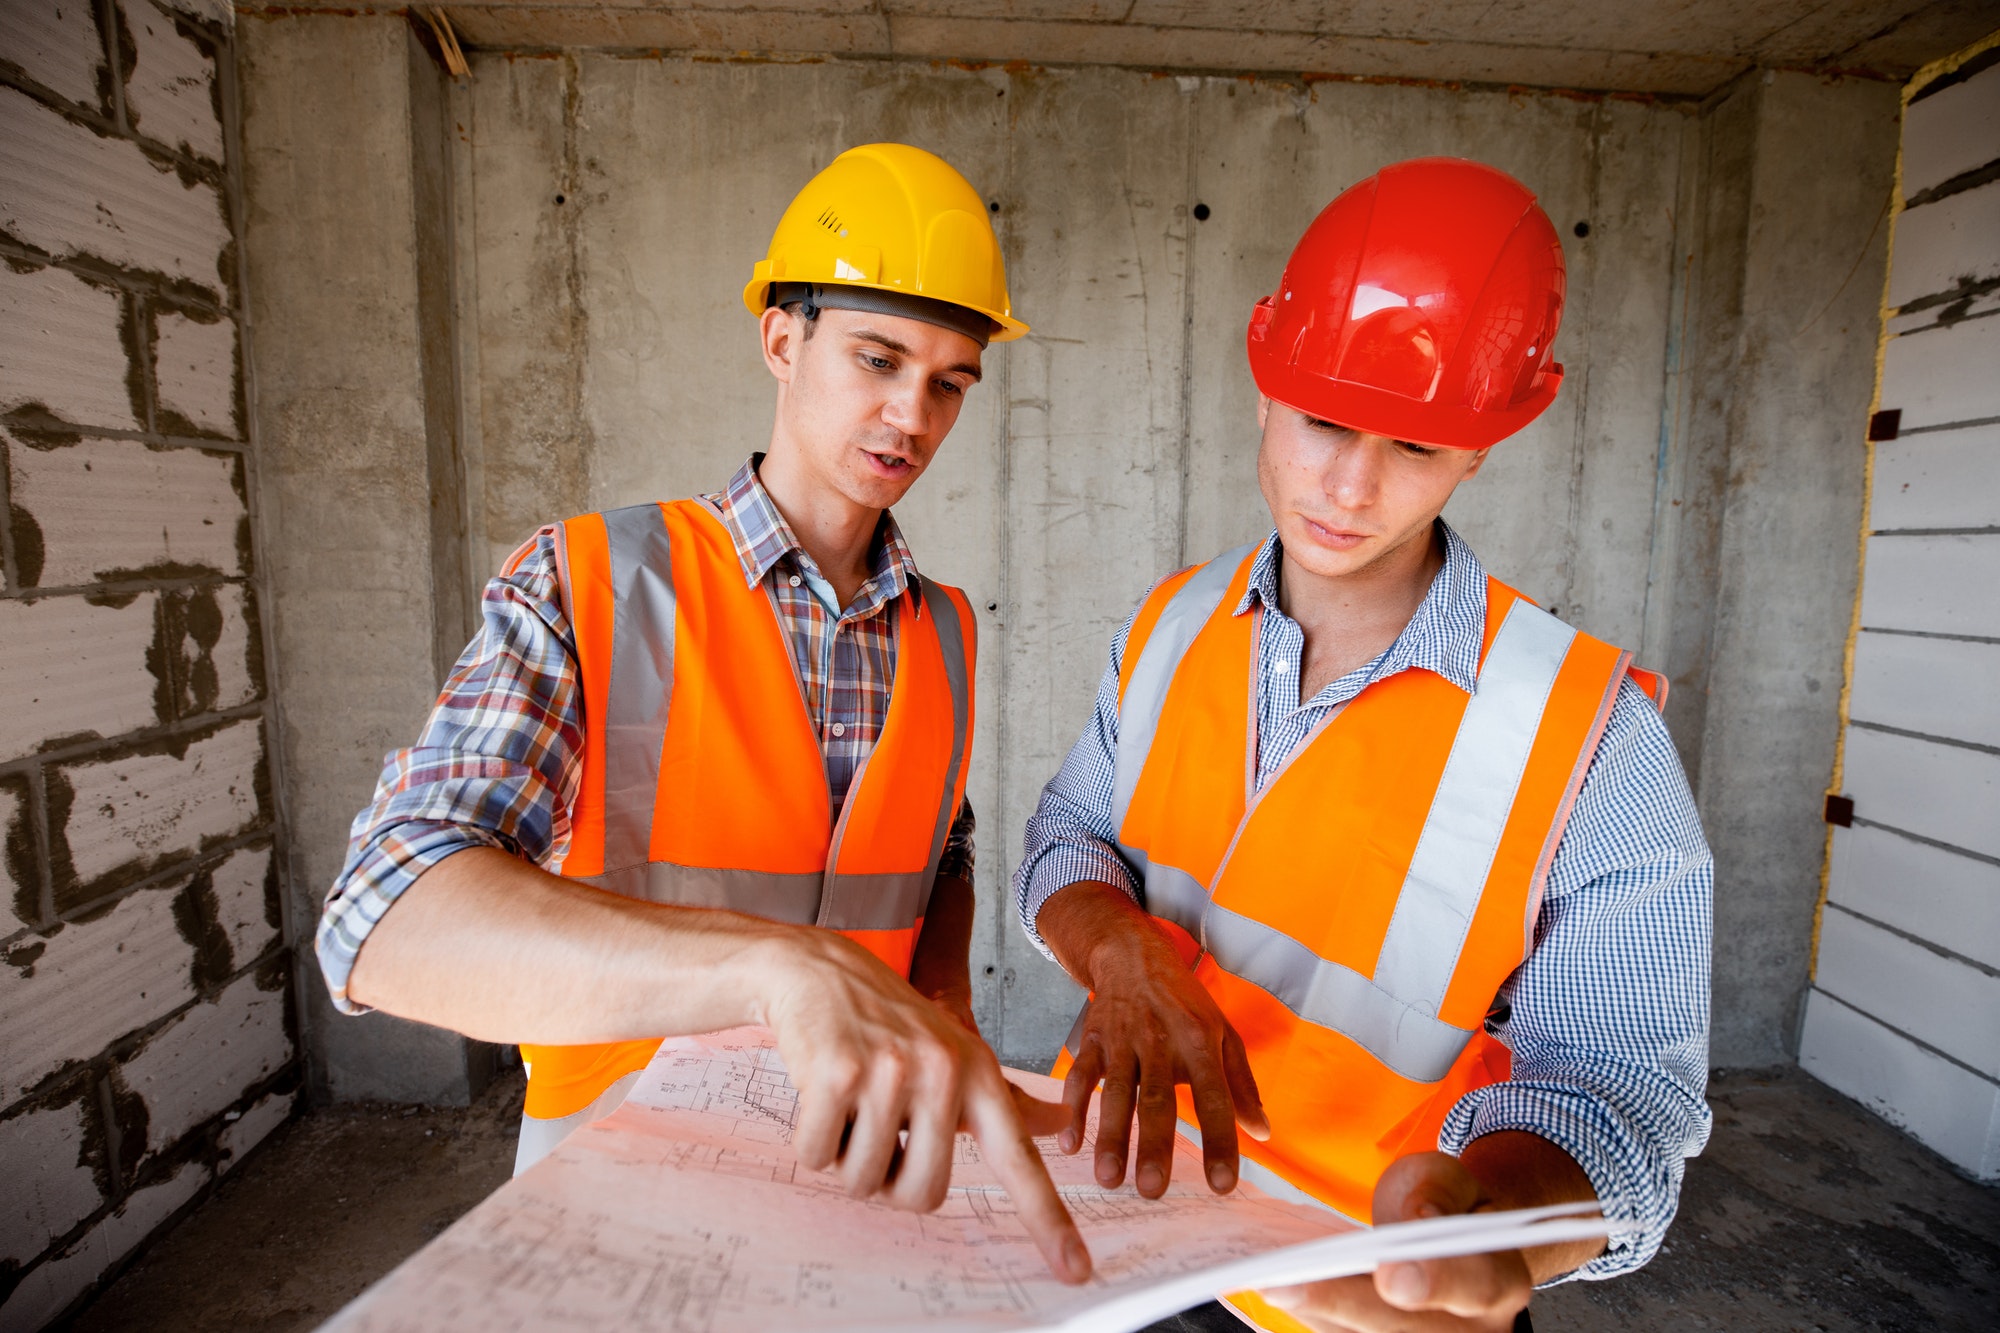 Two men dressed in orange work vests and helmets explores construction documentation on a concrete